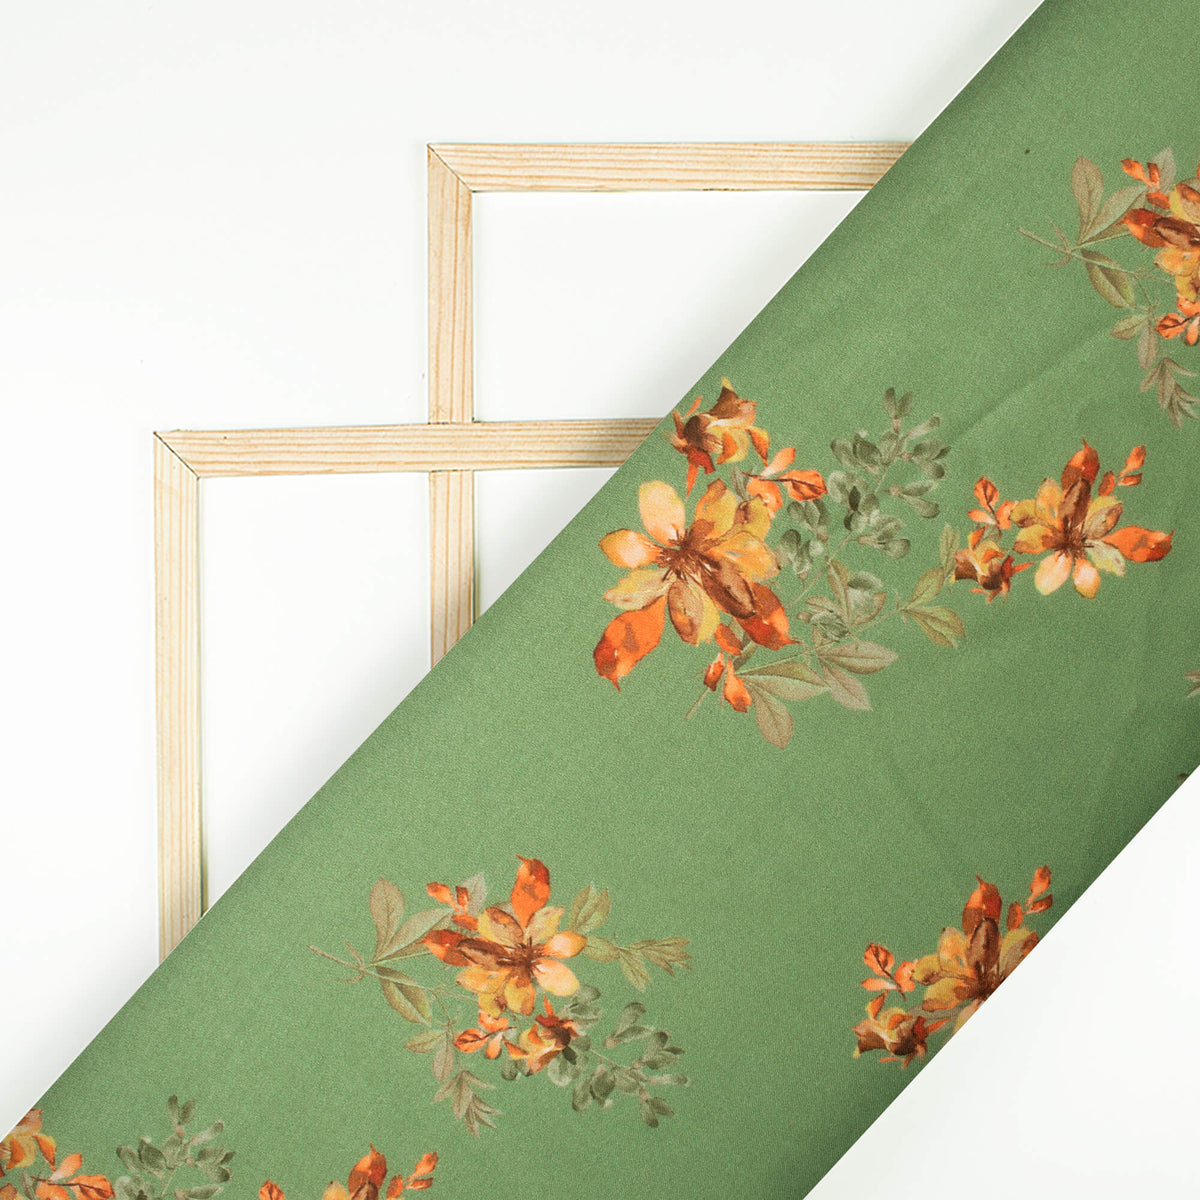 Forest Green And Orange Floral Pattern Digital Print Premium Lush Satin Fabric